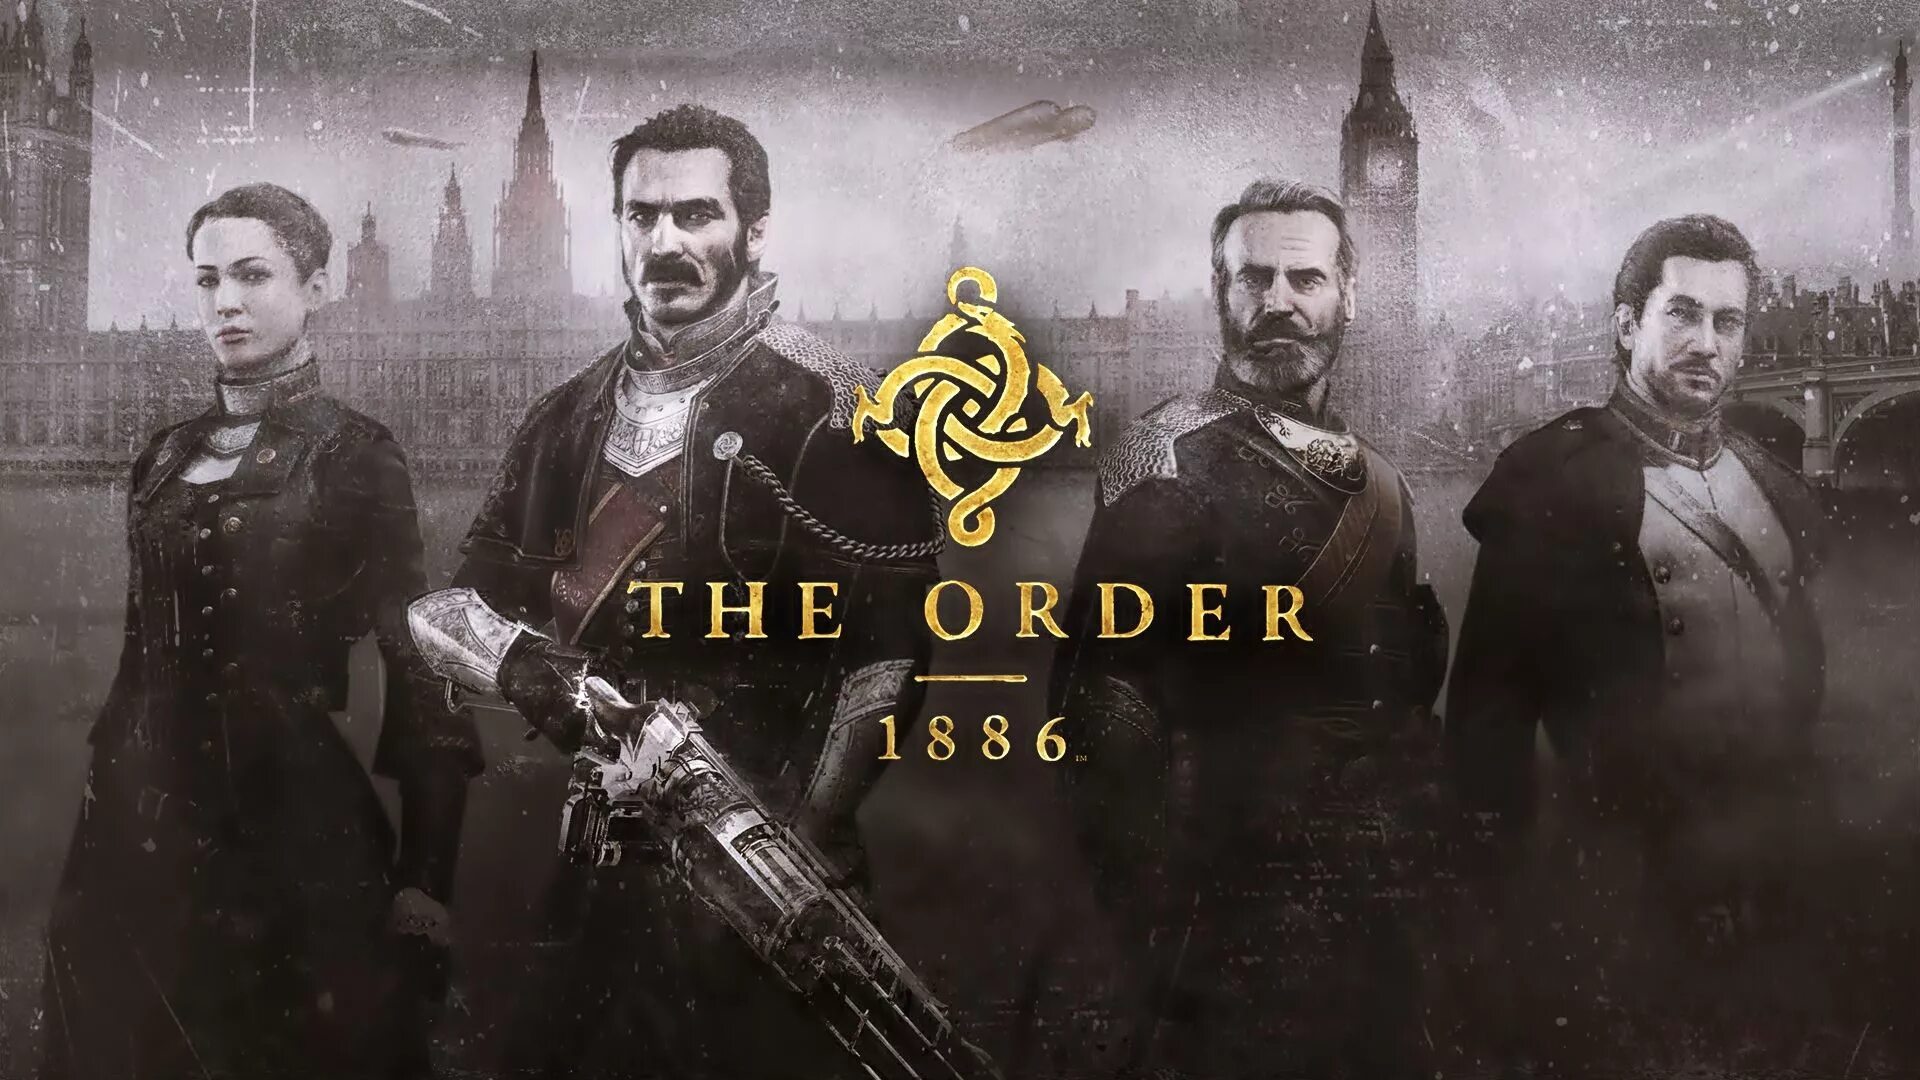 The man orders a. The order: 1886. Игра орден 1886 на ps4. Сэр Галахад the order 1886 Art.